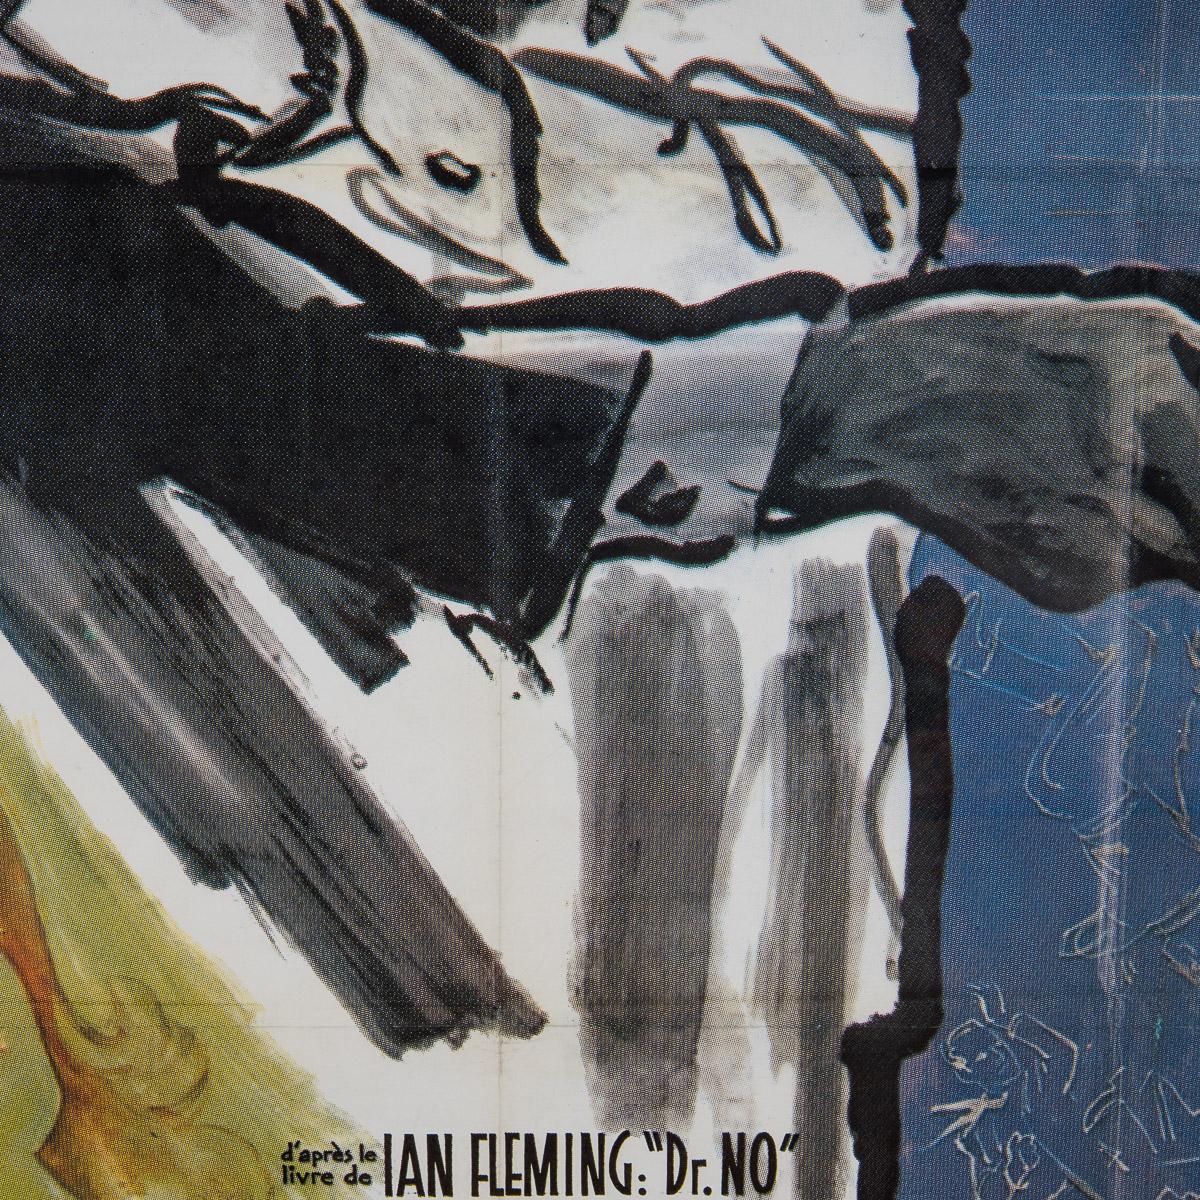 Original French Grande Release James Bond 007 Dr. NO Poster, c.1962 For Sale 7